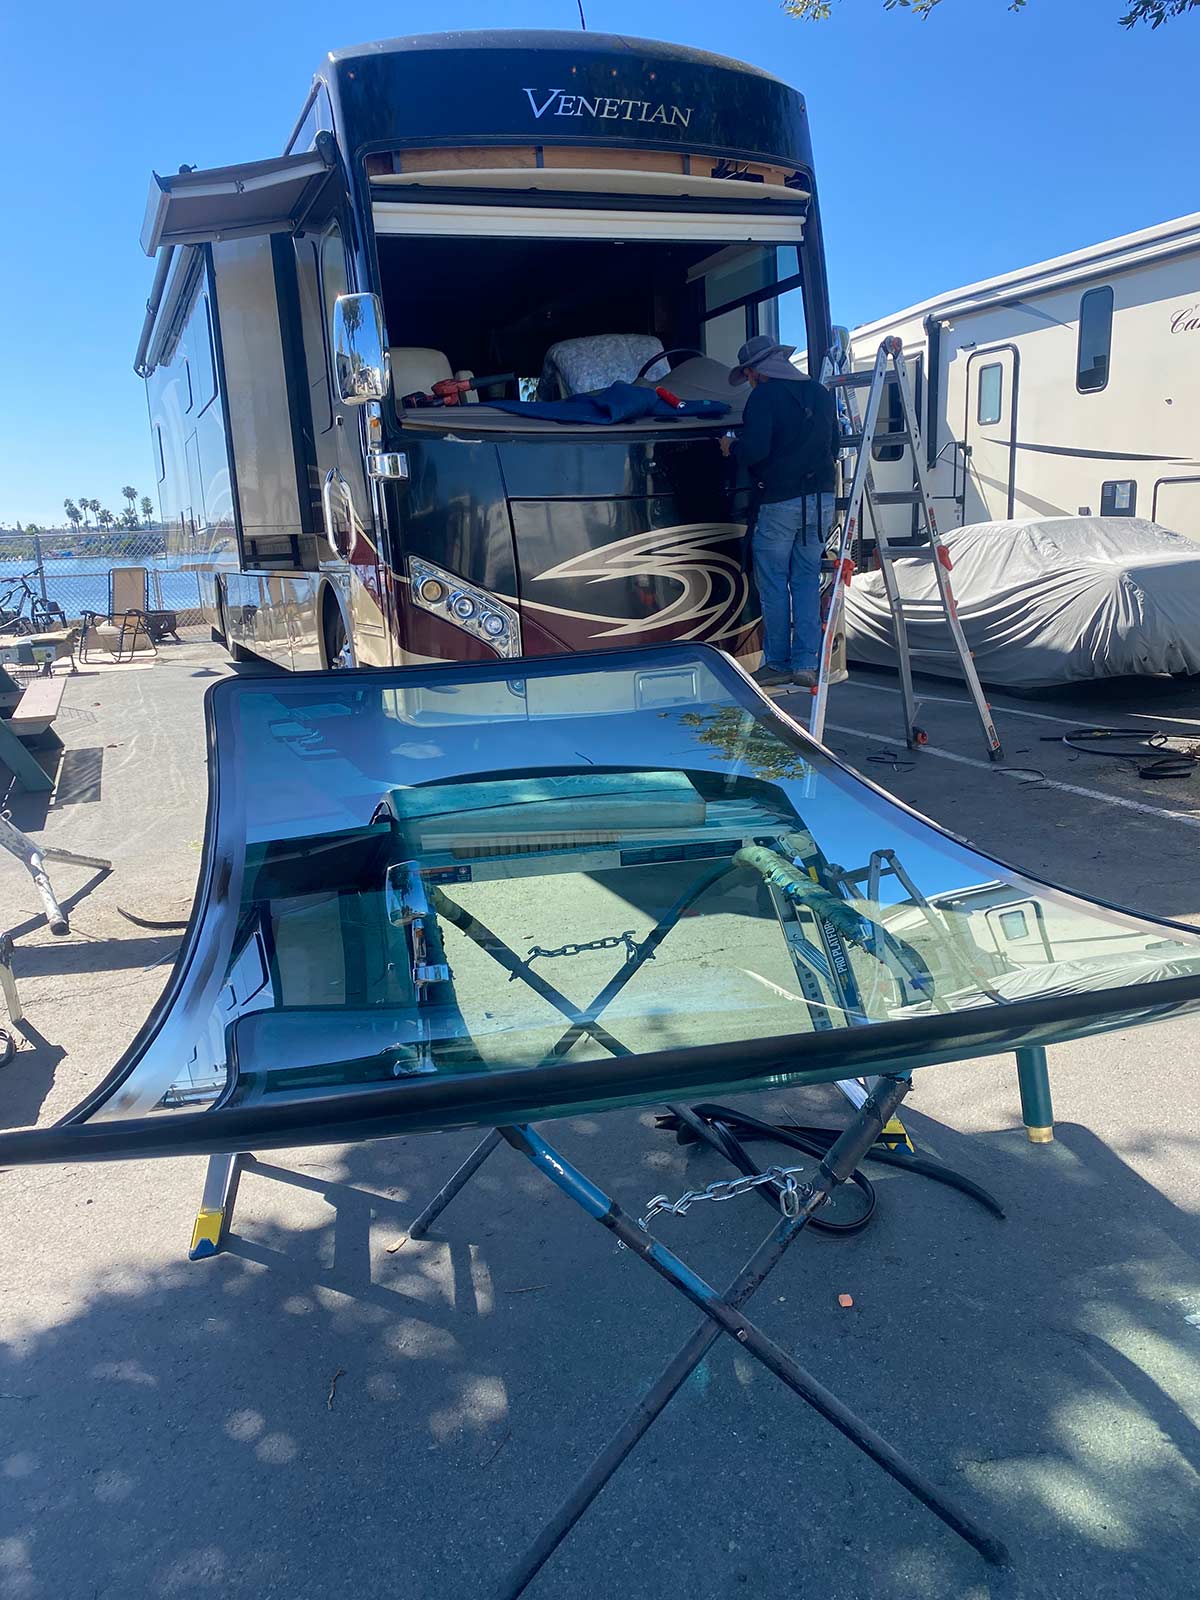 2018 venetian RV windshield replacement job